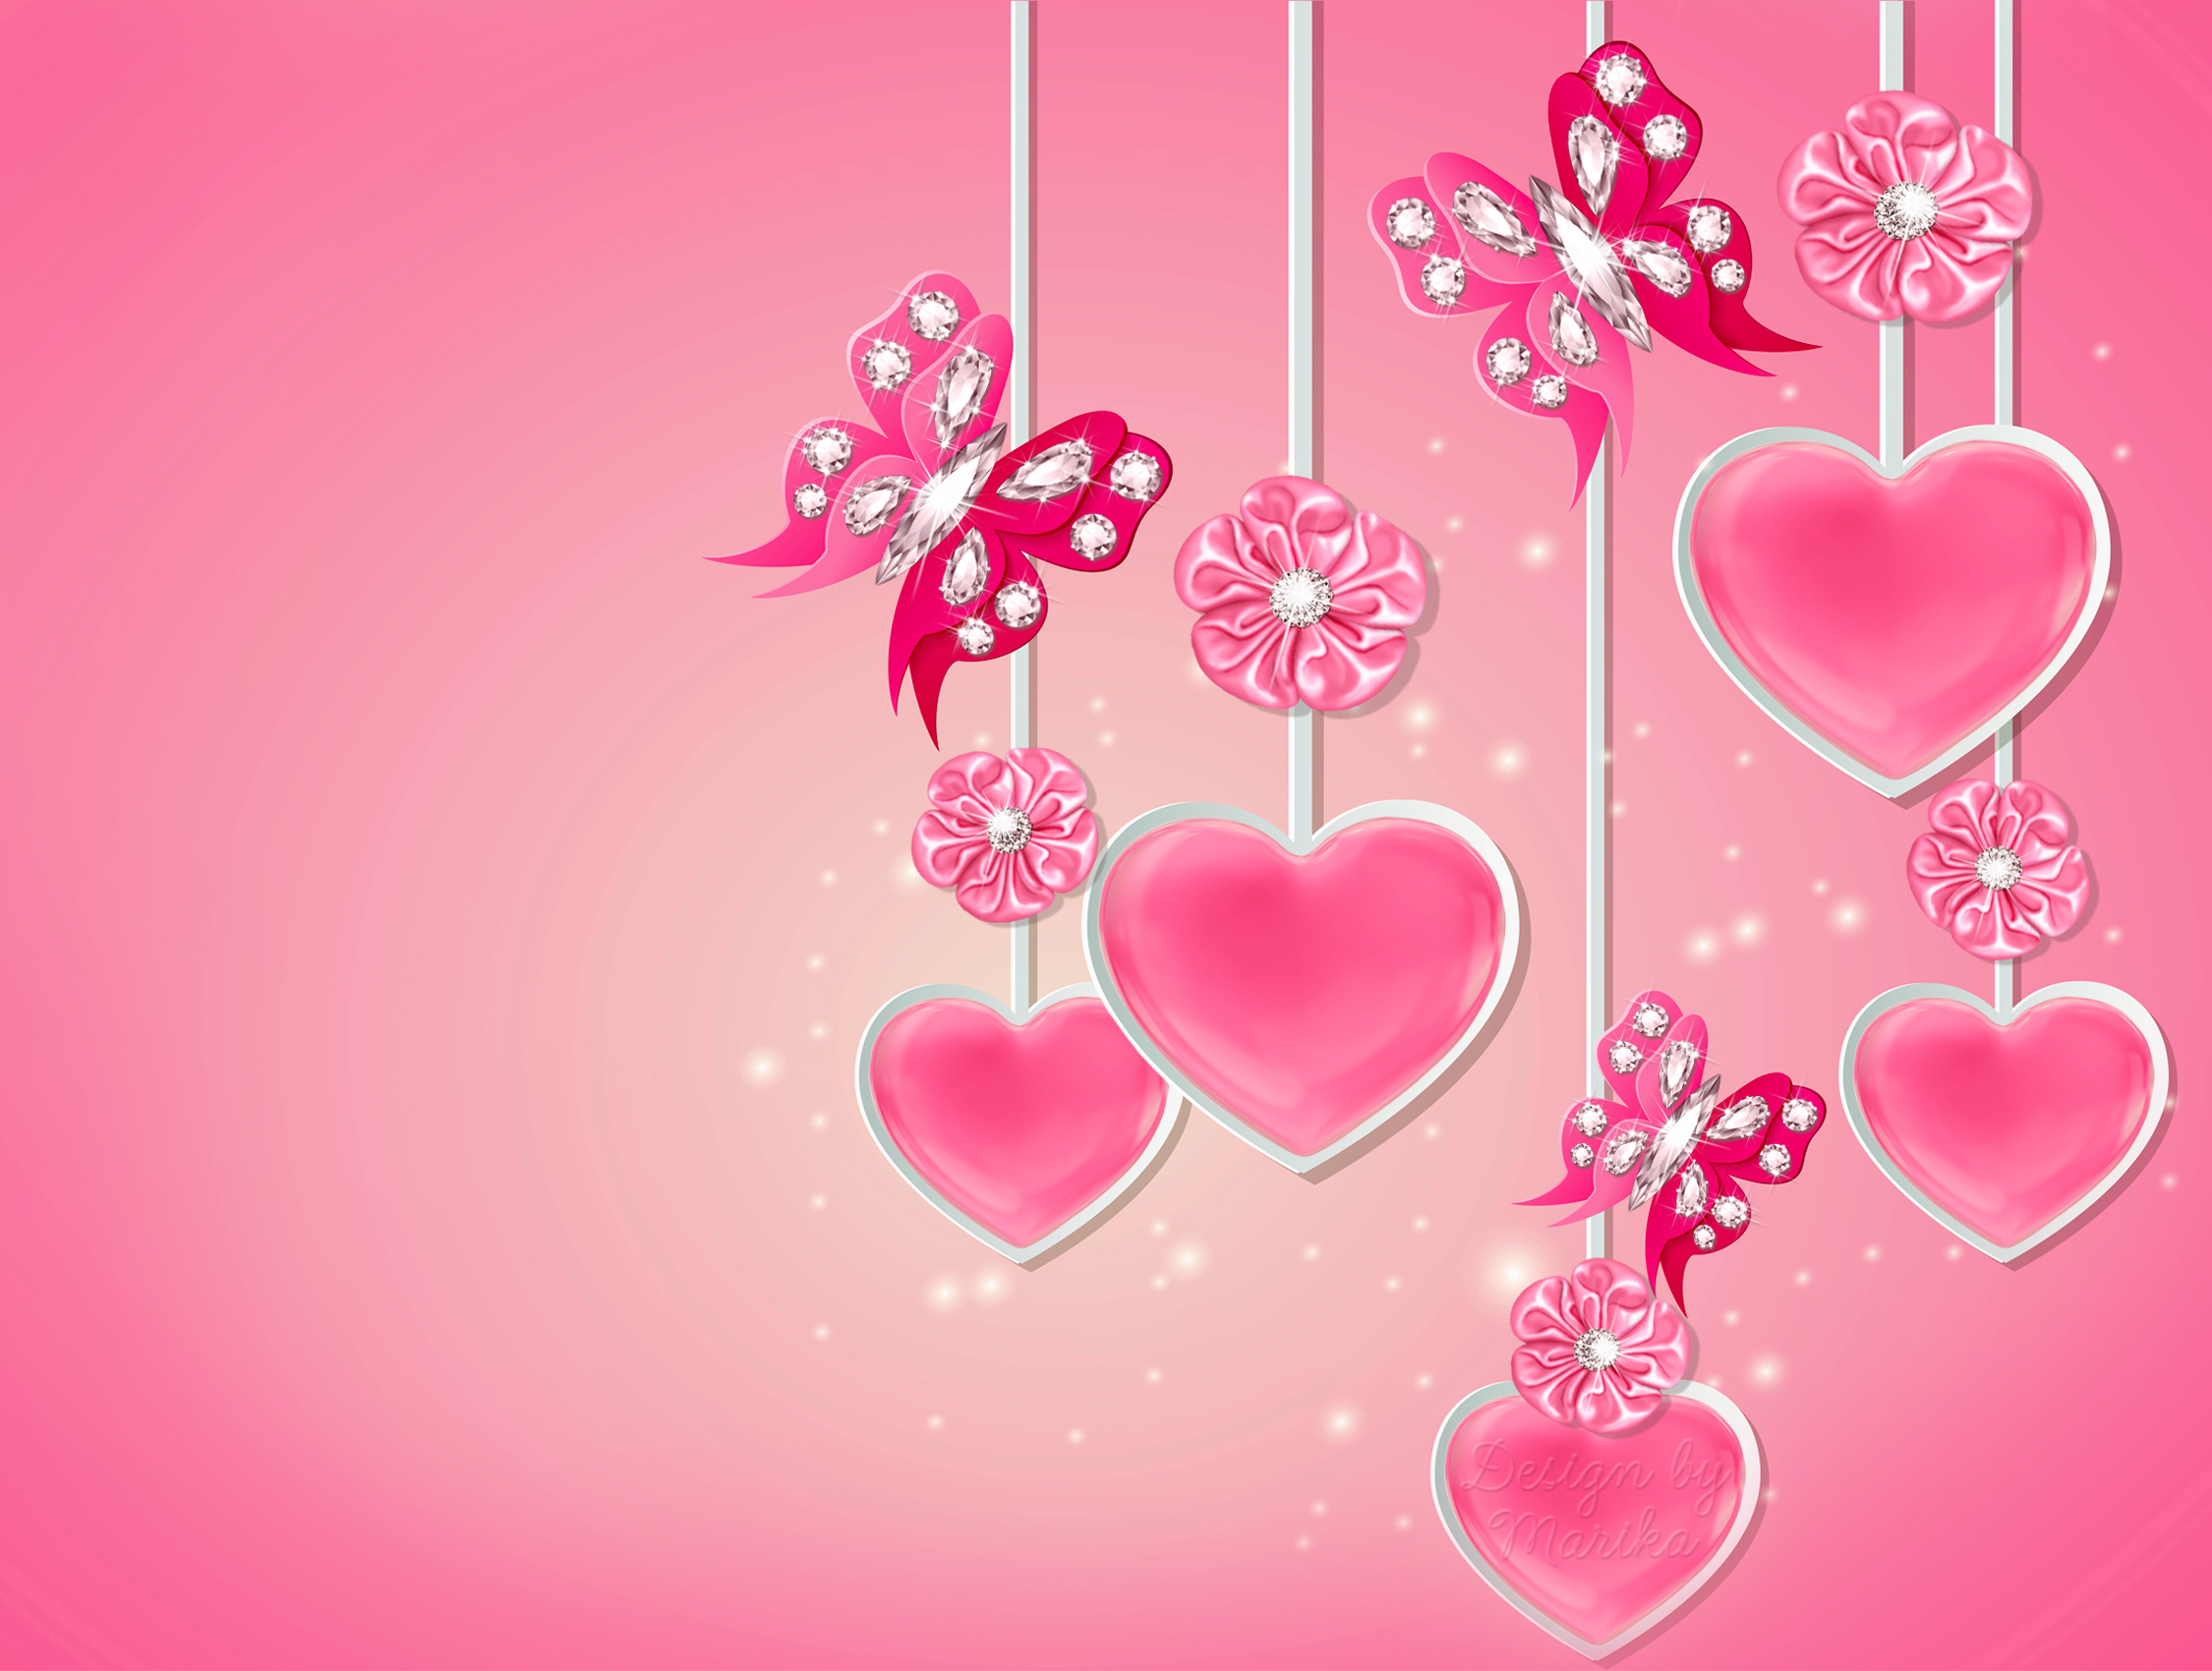 Wallpaper Design By Marika Pink Love Heart Romantic Diamonds